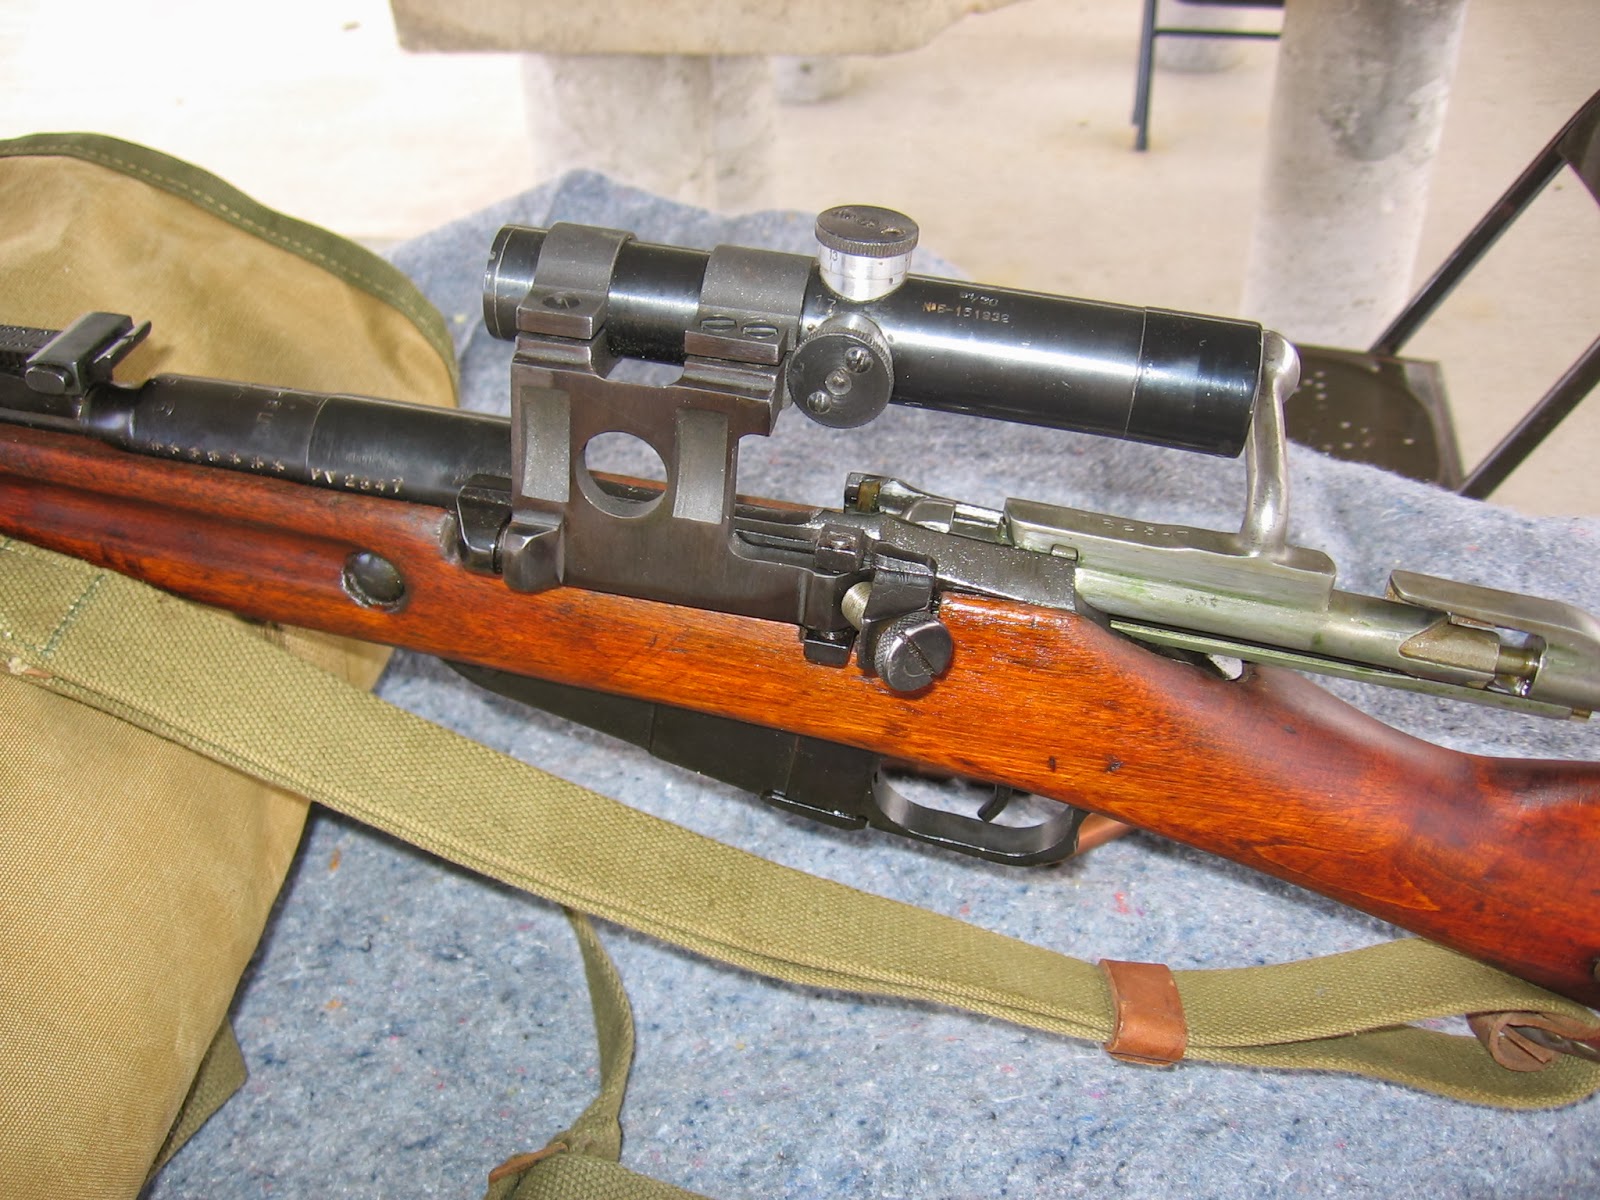 Old School Guns Shooting The Mosin Nagant M91 30 Sniper Rifle Images, Photos, Reviews